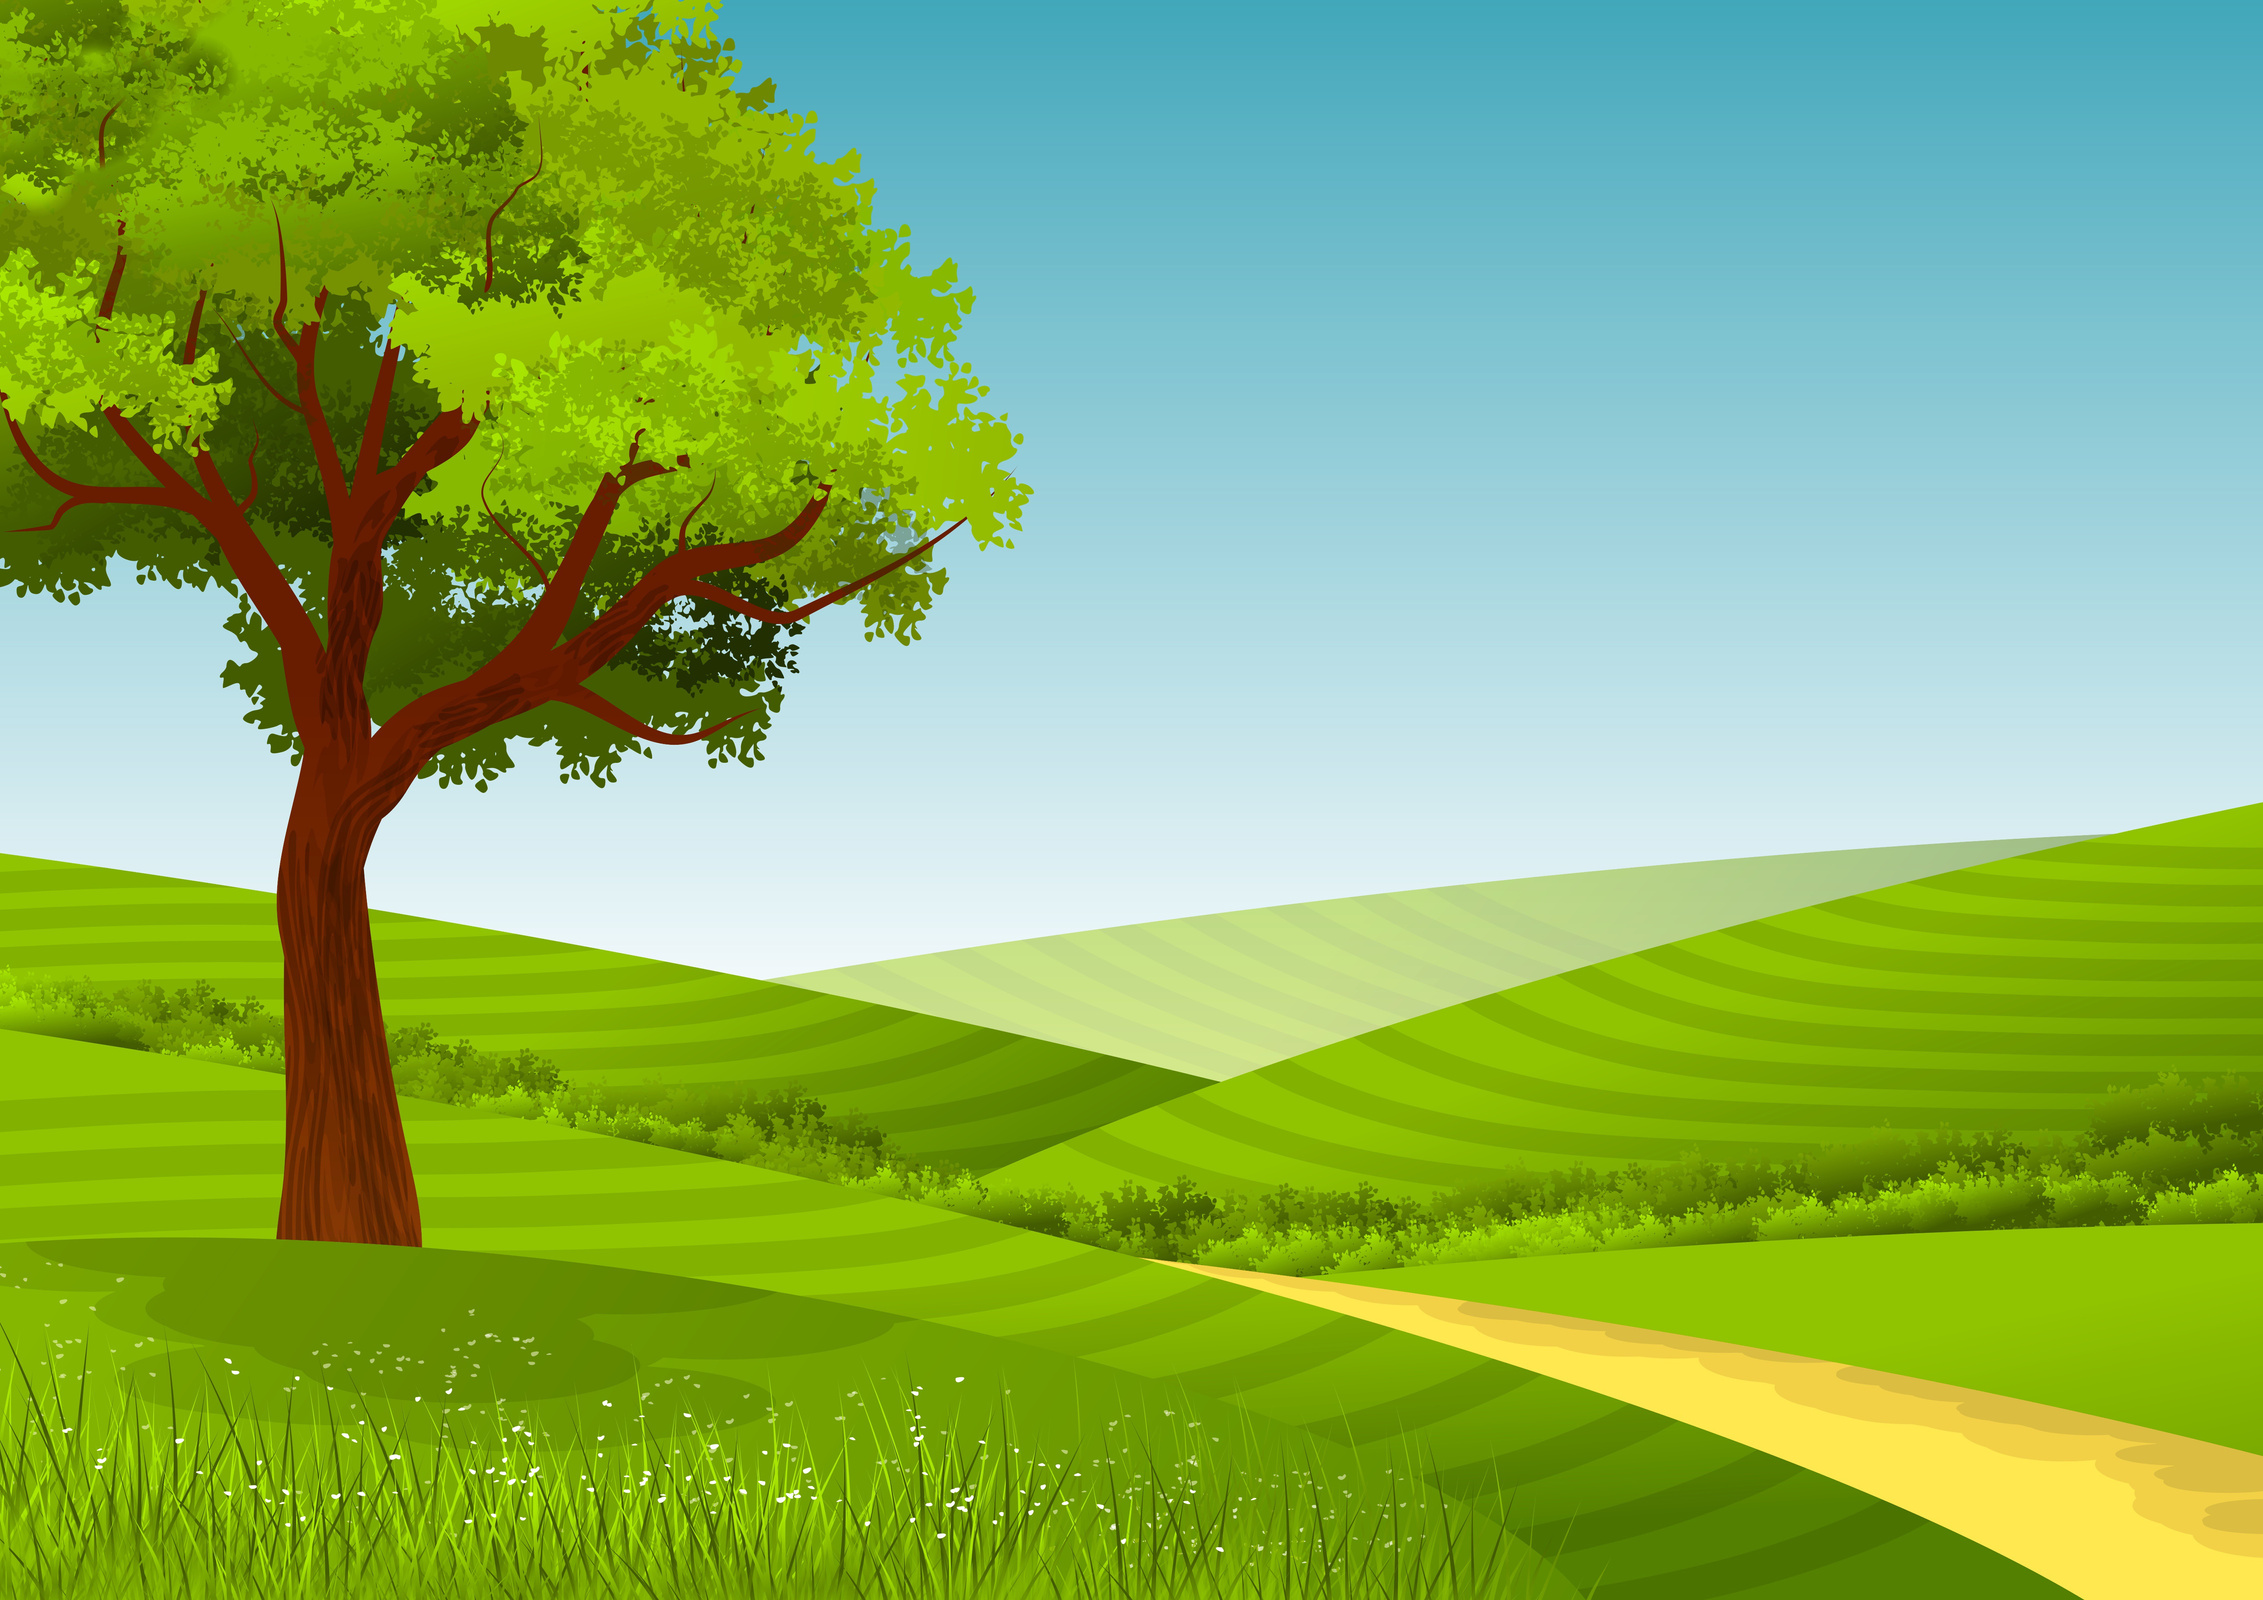 Tree in Grass Hills Illustration